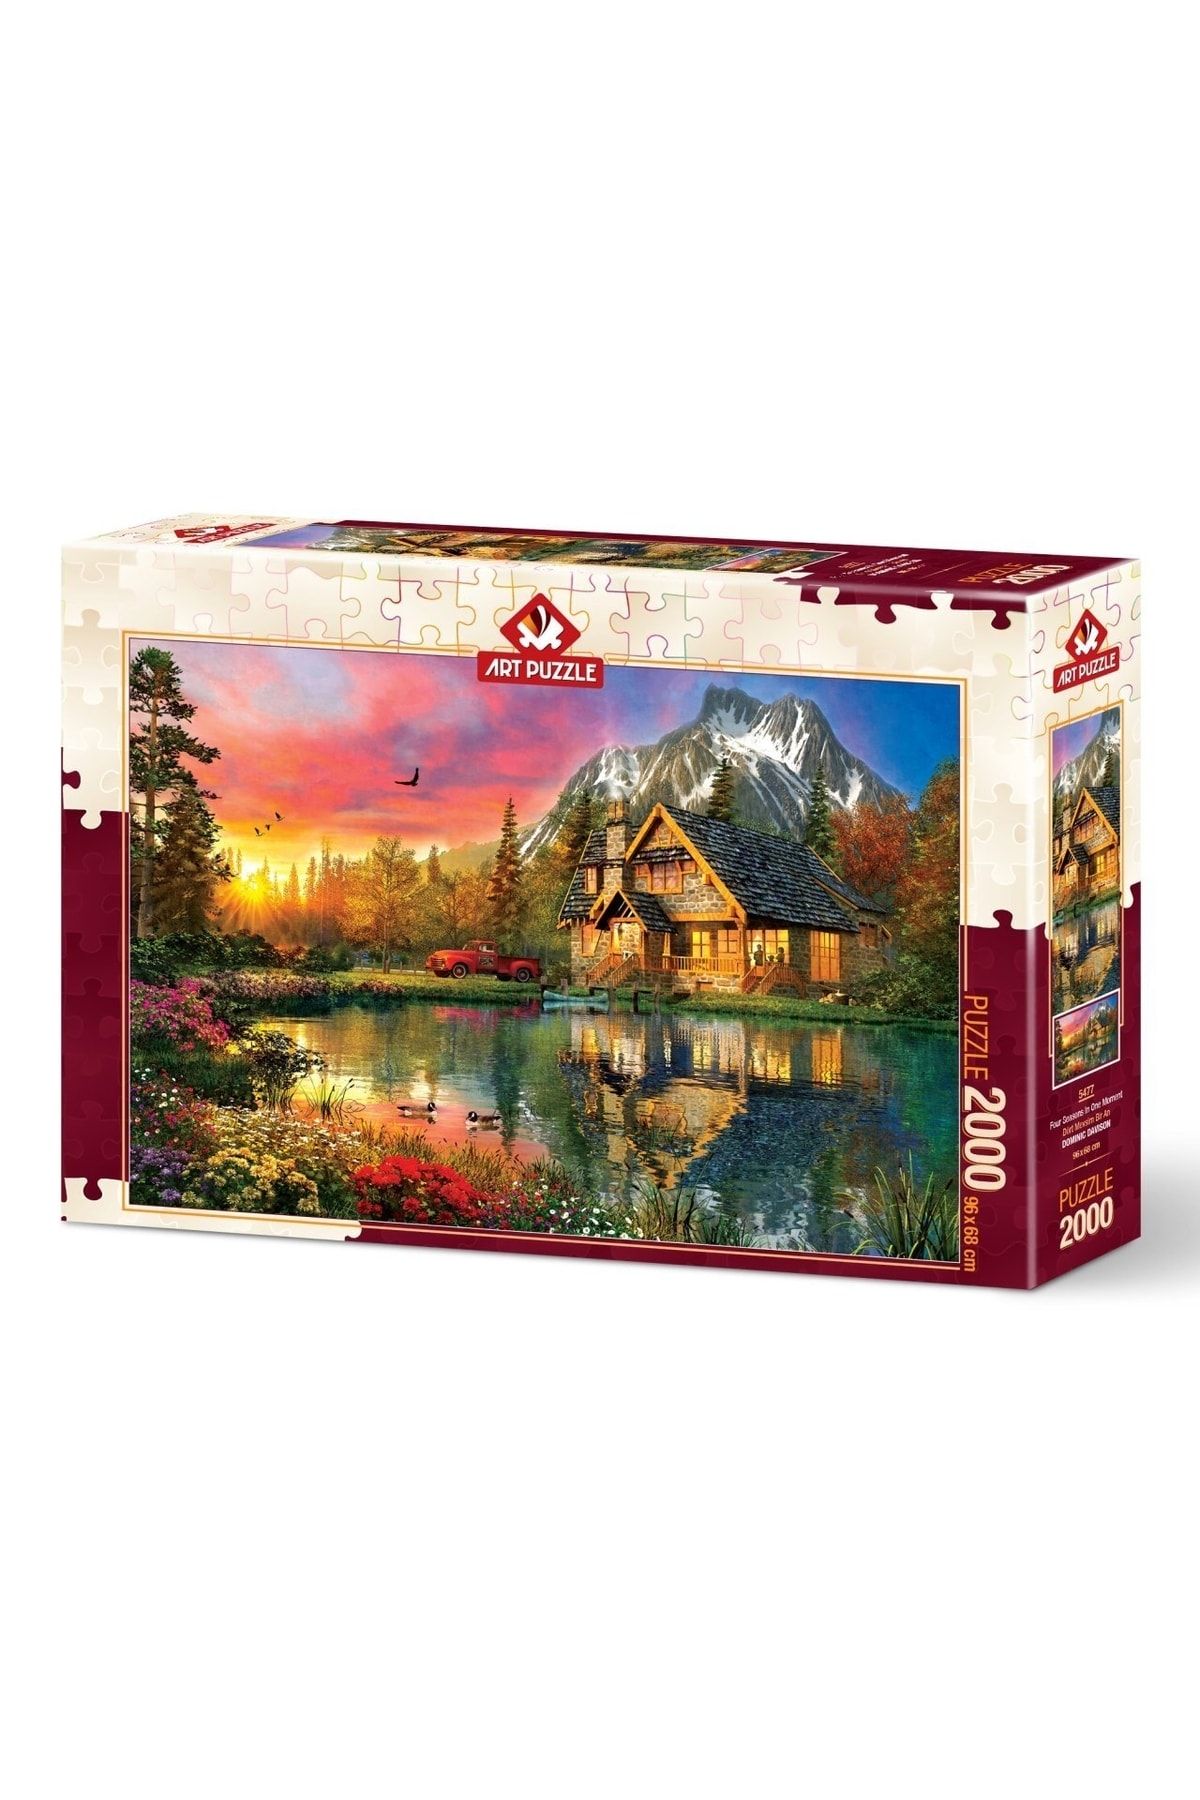 Doğan Oyuncak Dünyası Art Puzzle Dört Mevsim Bir An 2000 Parça Puzzle 5477 - Puzzle Seti - Yapboz - Yap-boz Puzzle